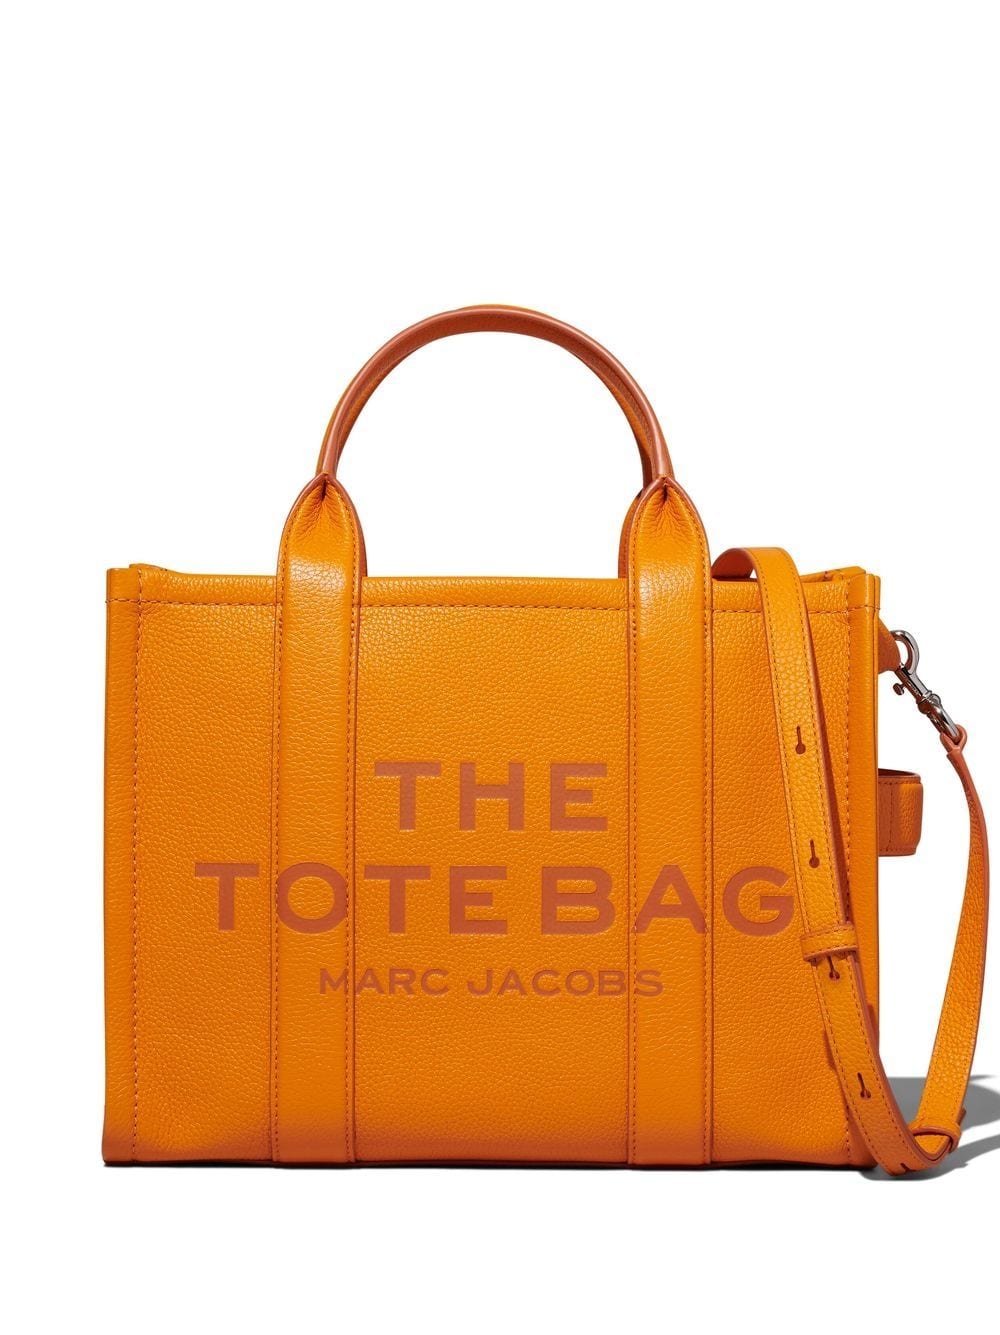 Marc Jacobs The Leather Medium Tote Bag In Orange